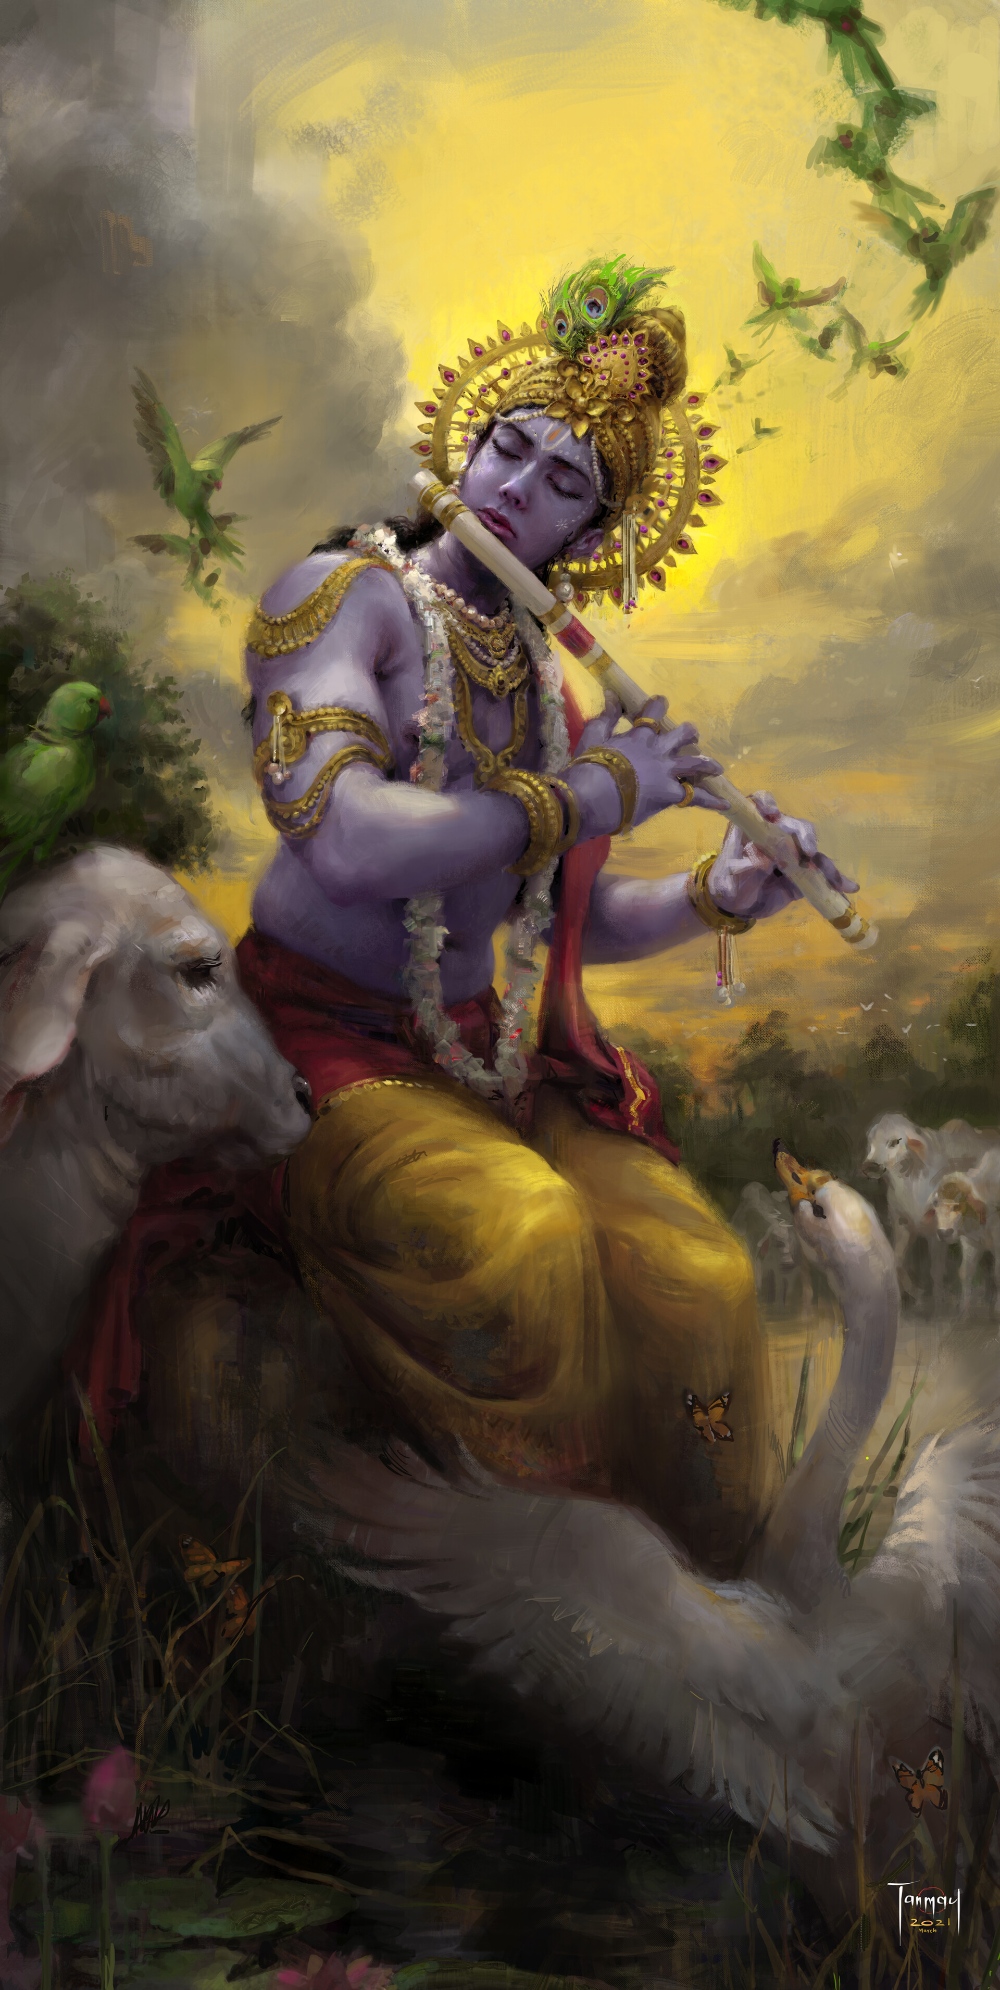 Vishnu God iPhone Wallpaper HD - iPhone Wallpapers